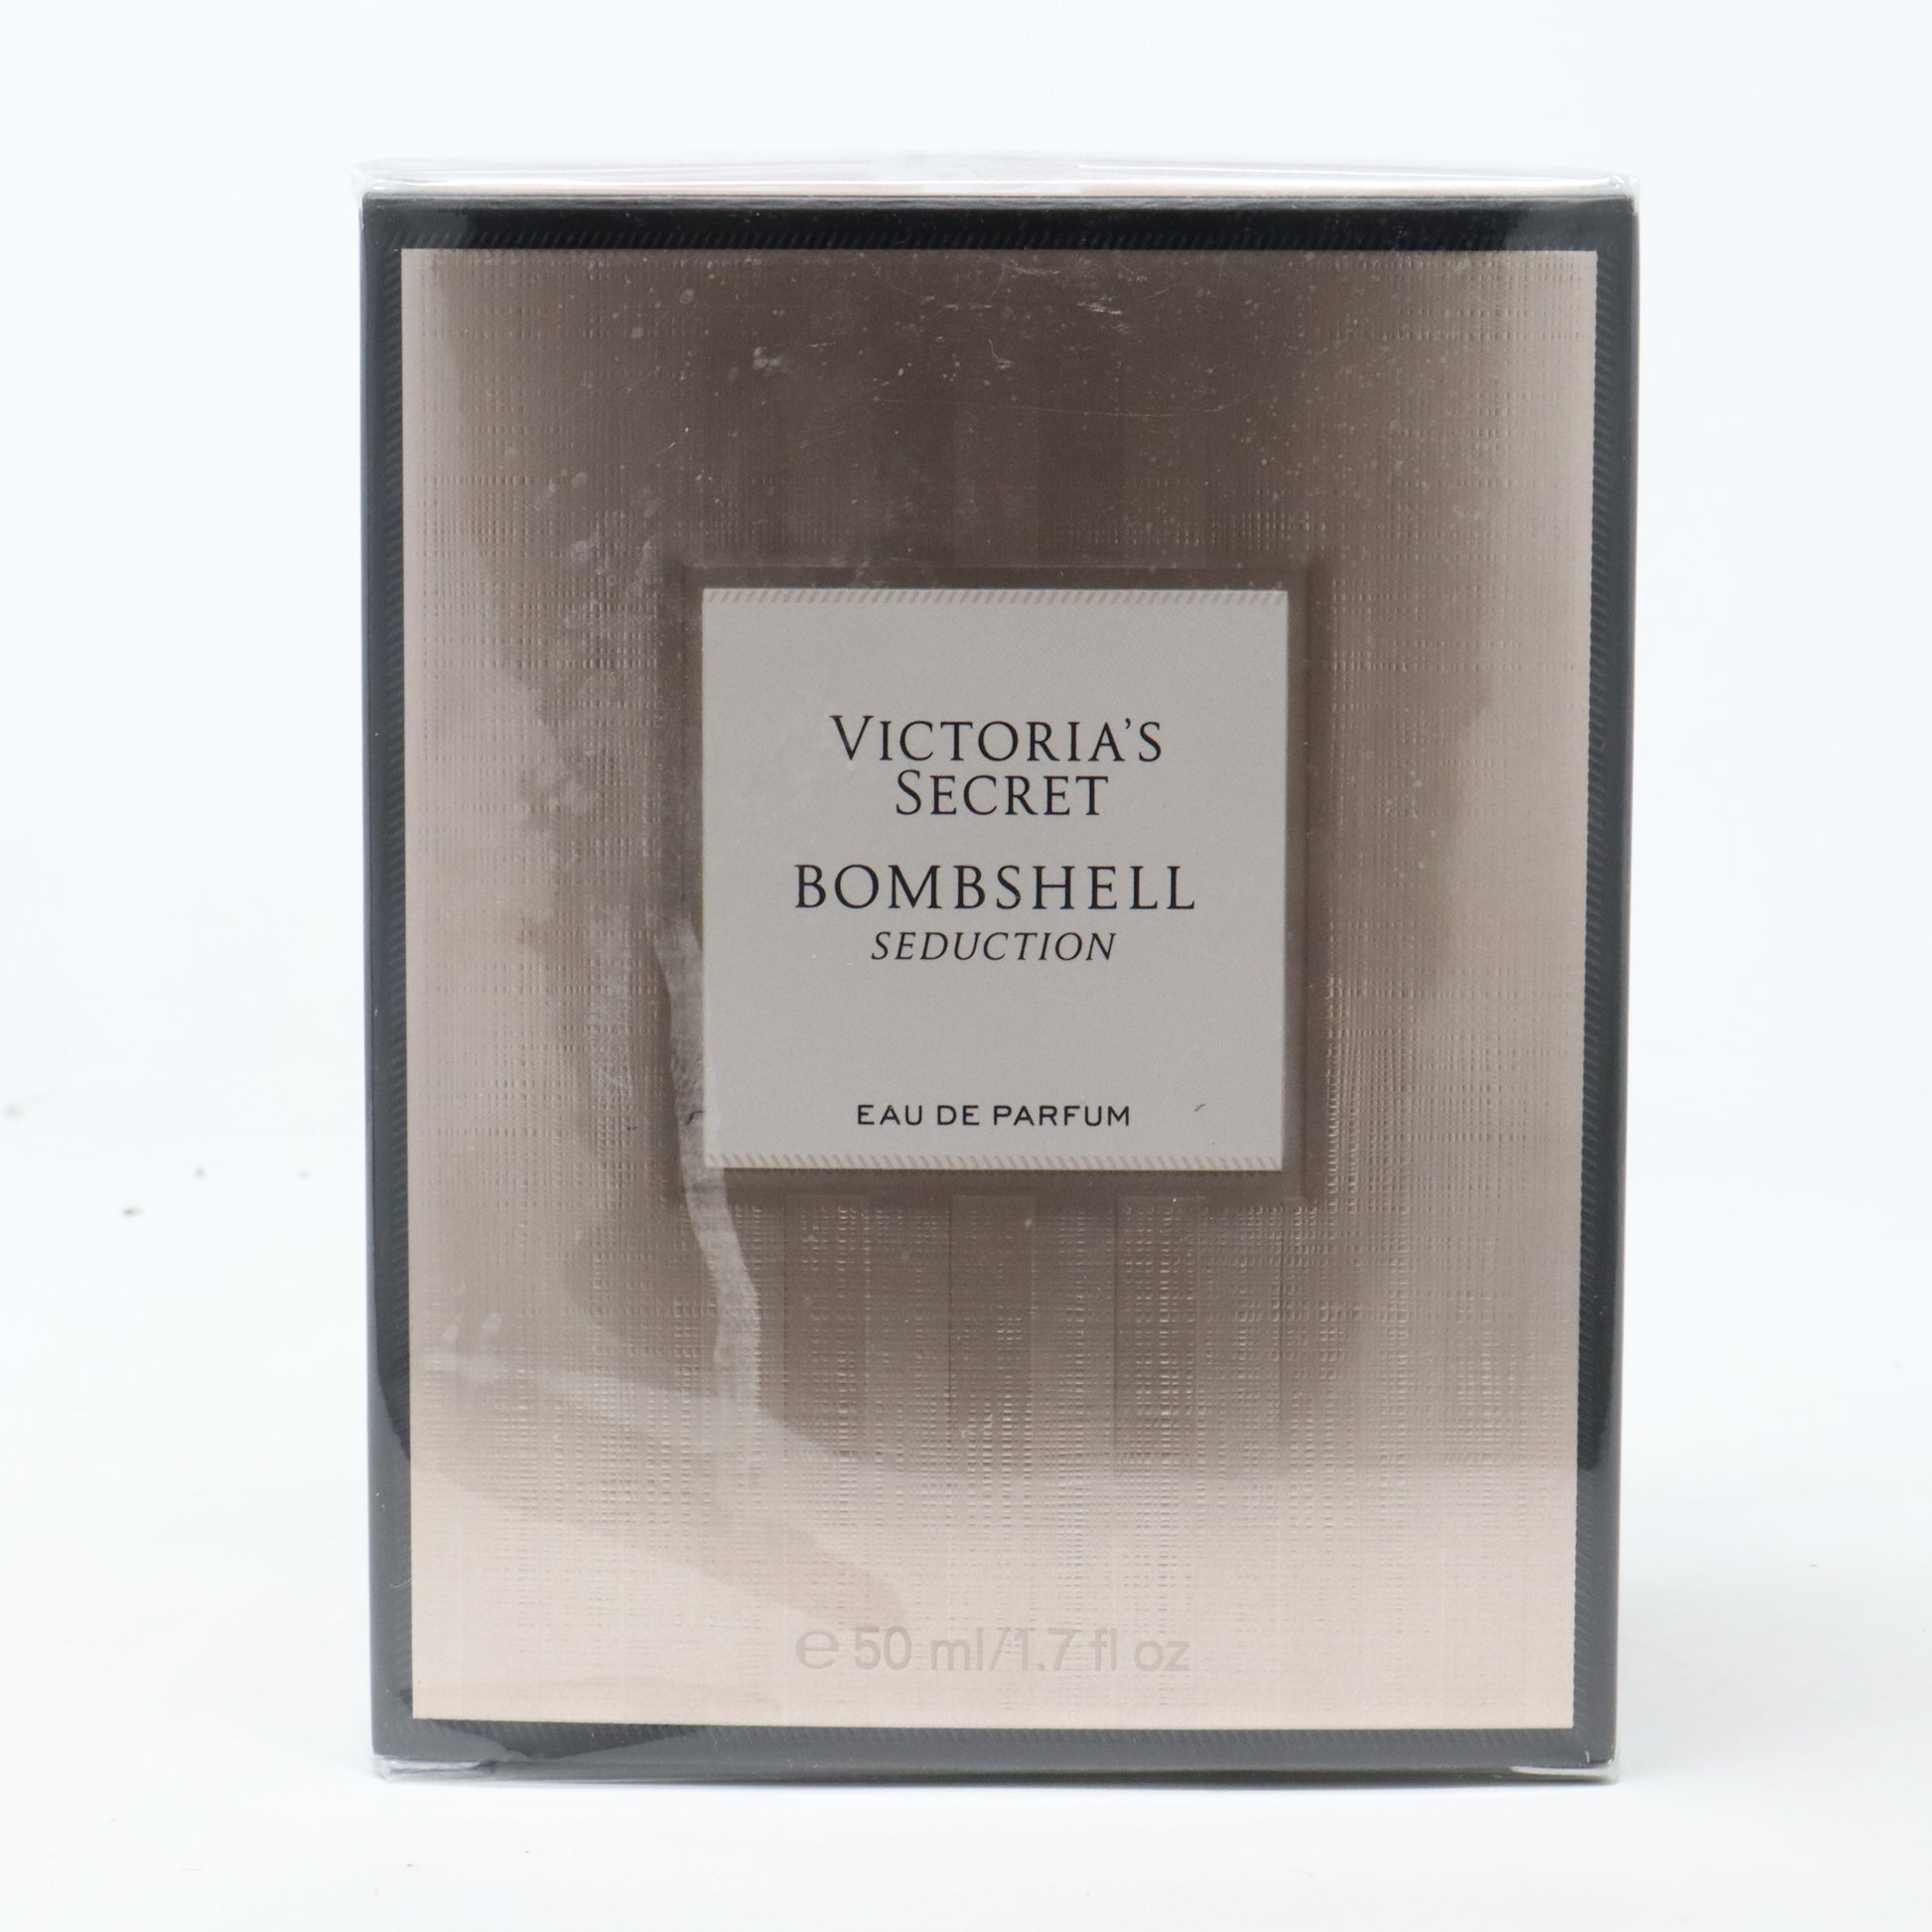 Bombshell Seduction Eau De Parfum 50 ml